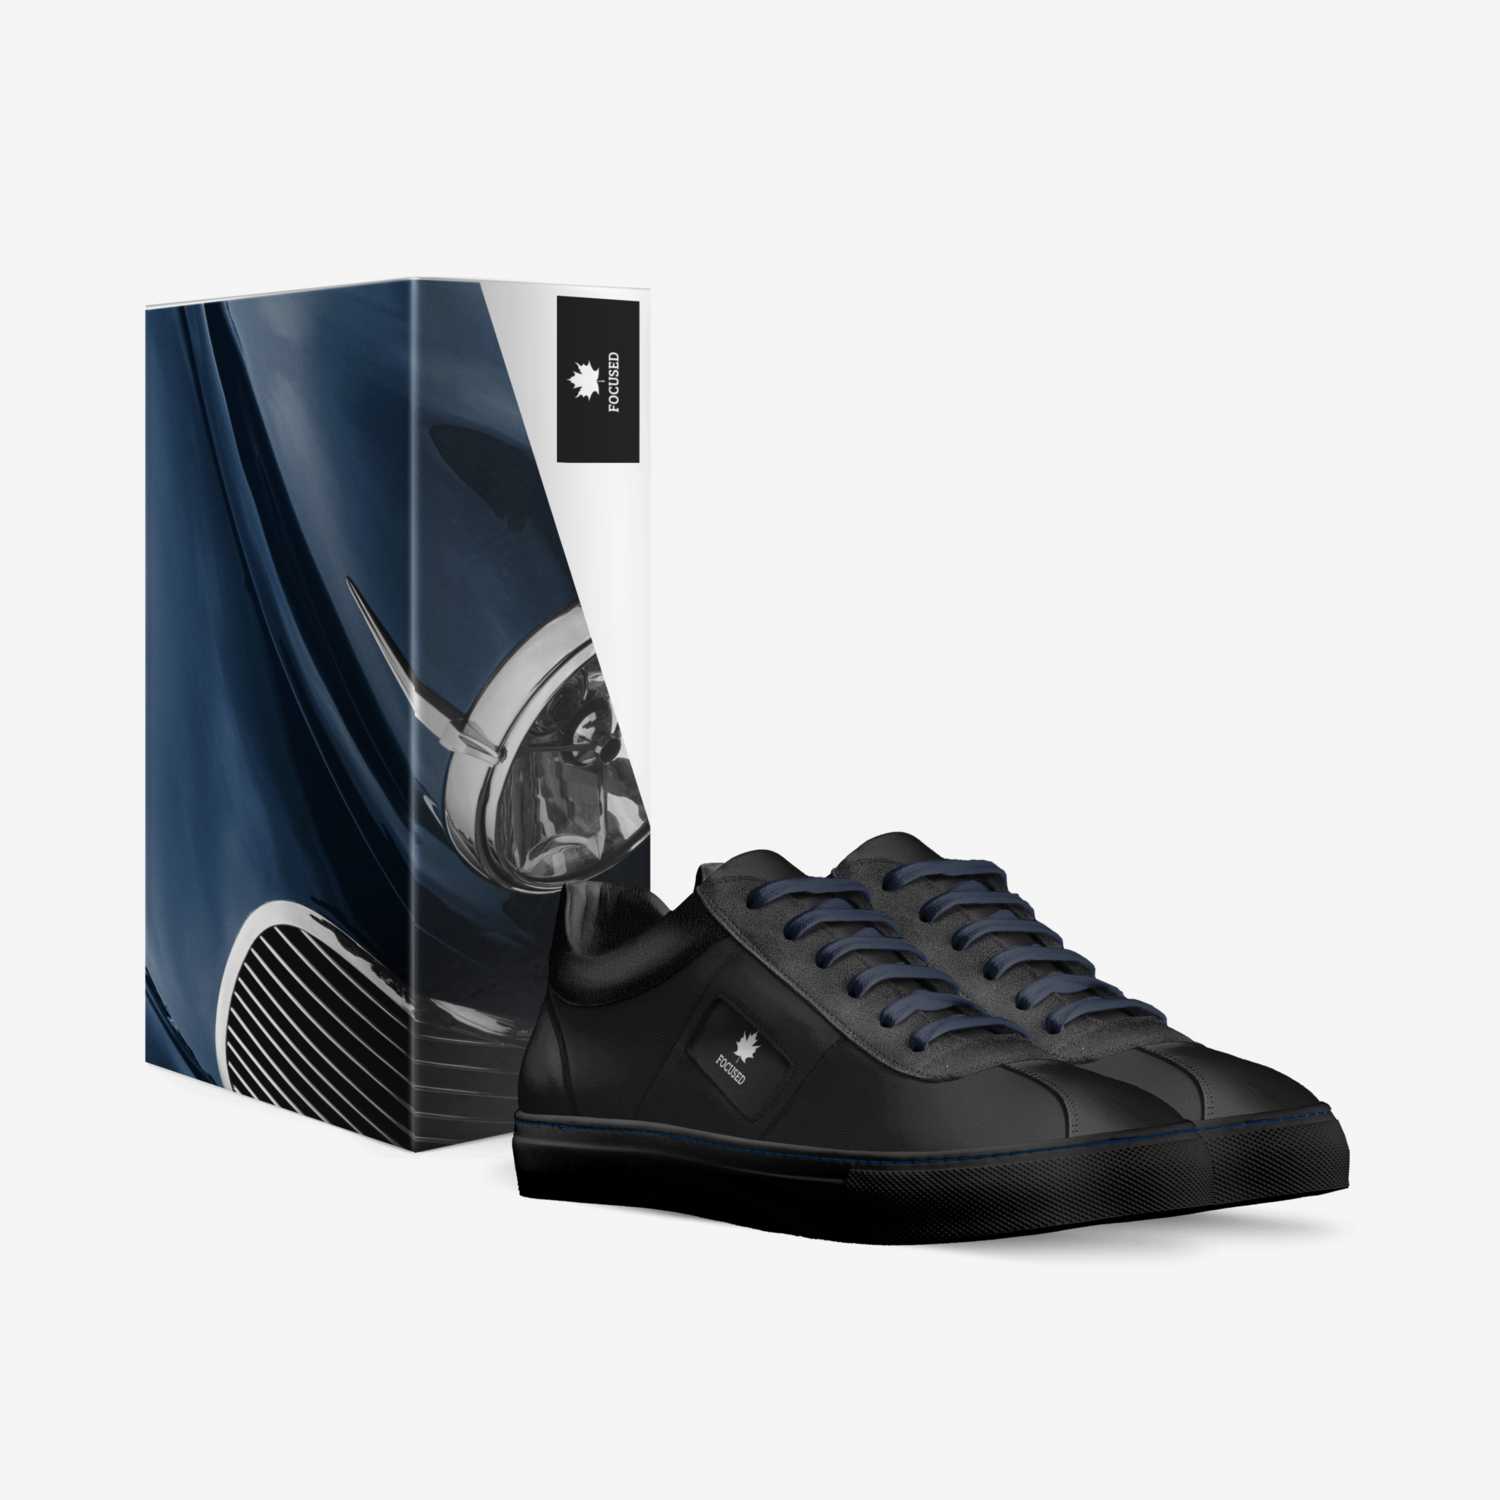 FOCUSED custom made in Italy shoes by Elijah Adams | Box view